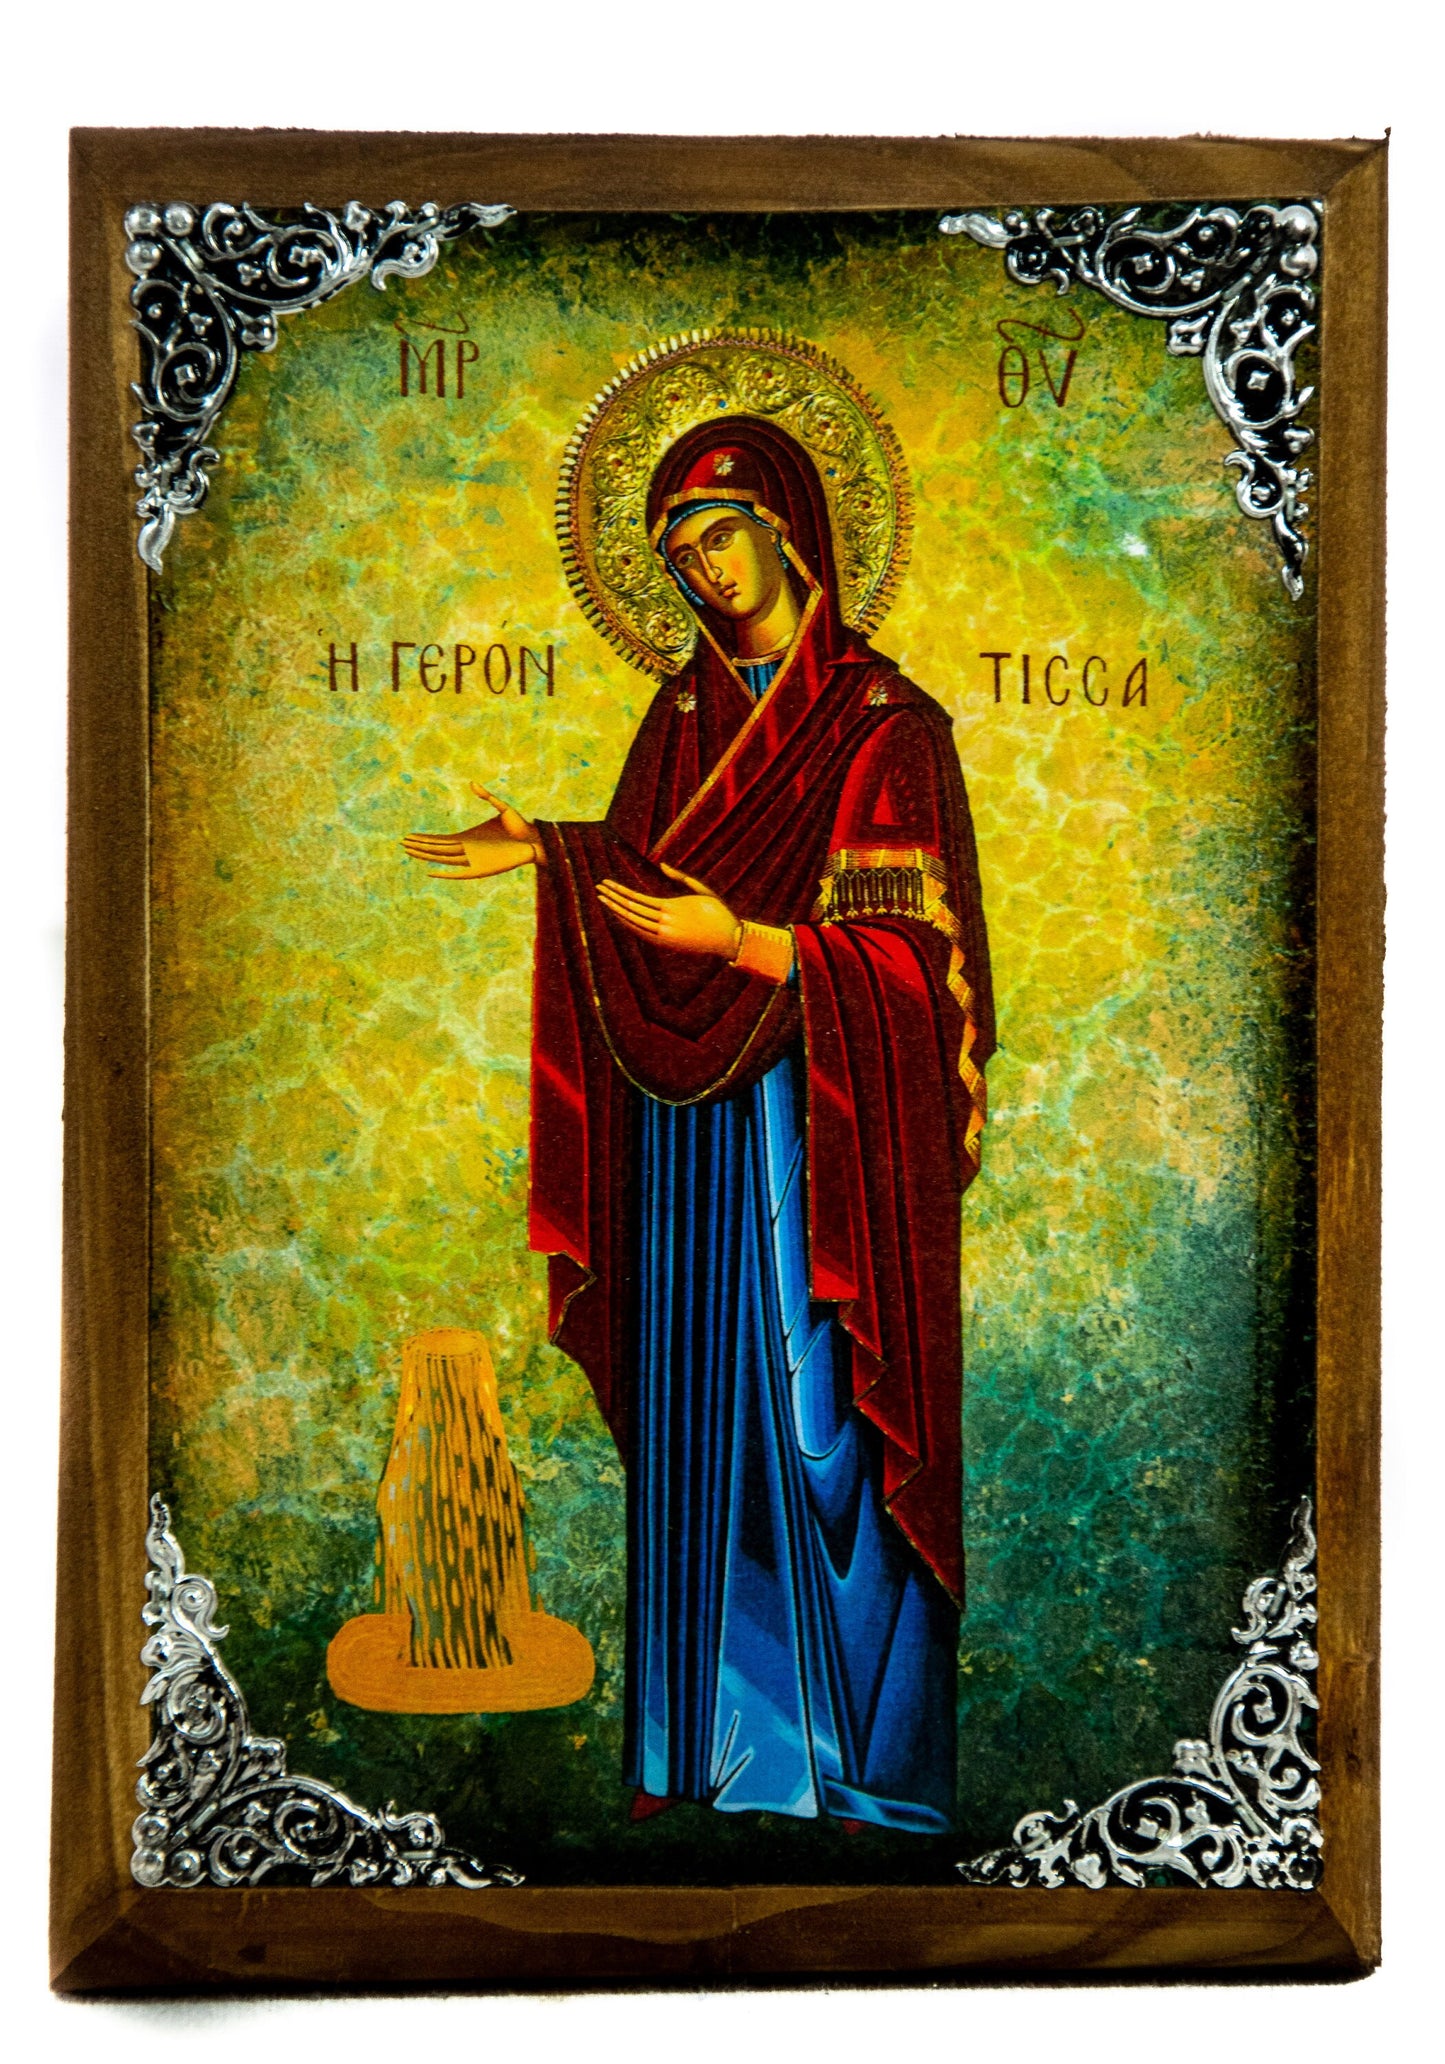 Virgin Mary icon Panagia Giatrissa, Handmade Greek Orthodox Icon, Mother of God Byzantine art, Theotokos wall hanging wood plaque decor TheHolyArt